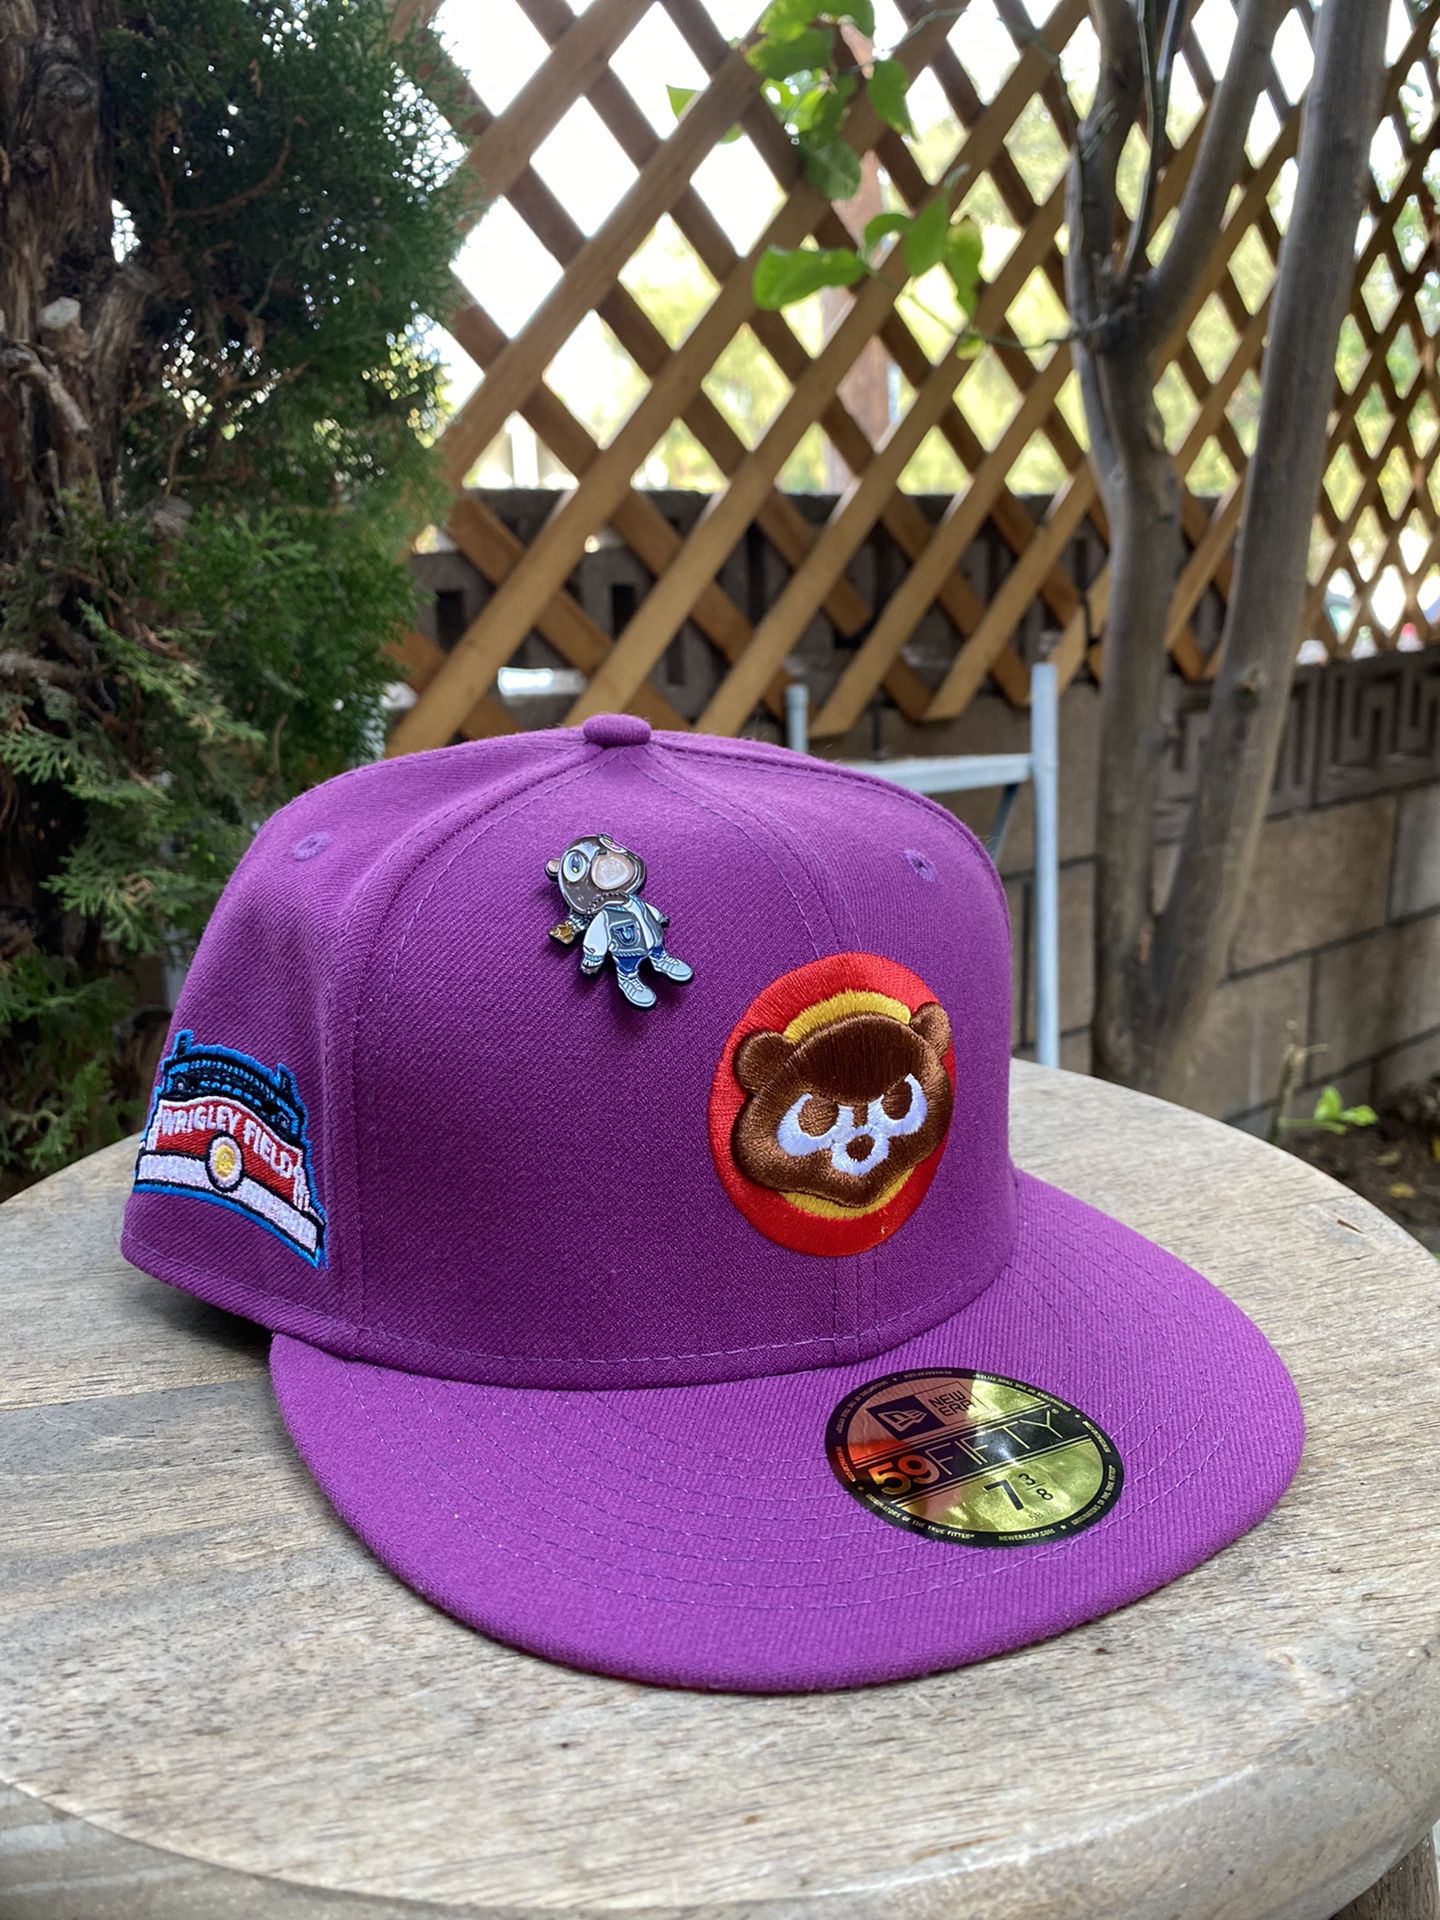 Grail Hats For Sale 7 3/8 Cubs $400